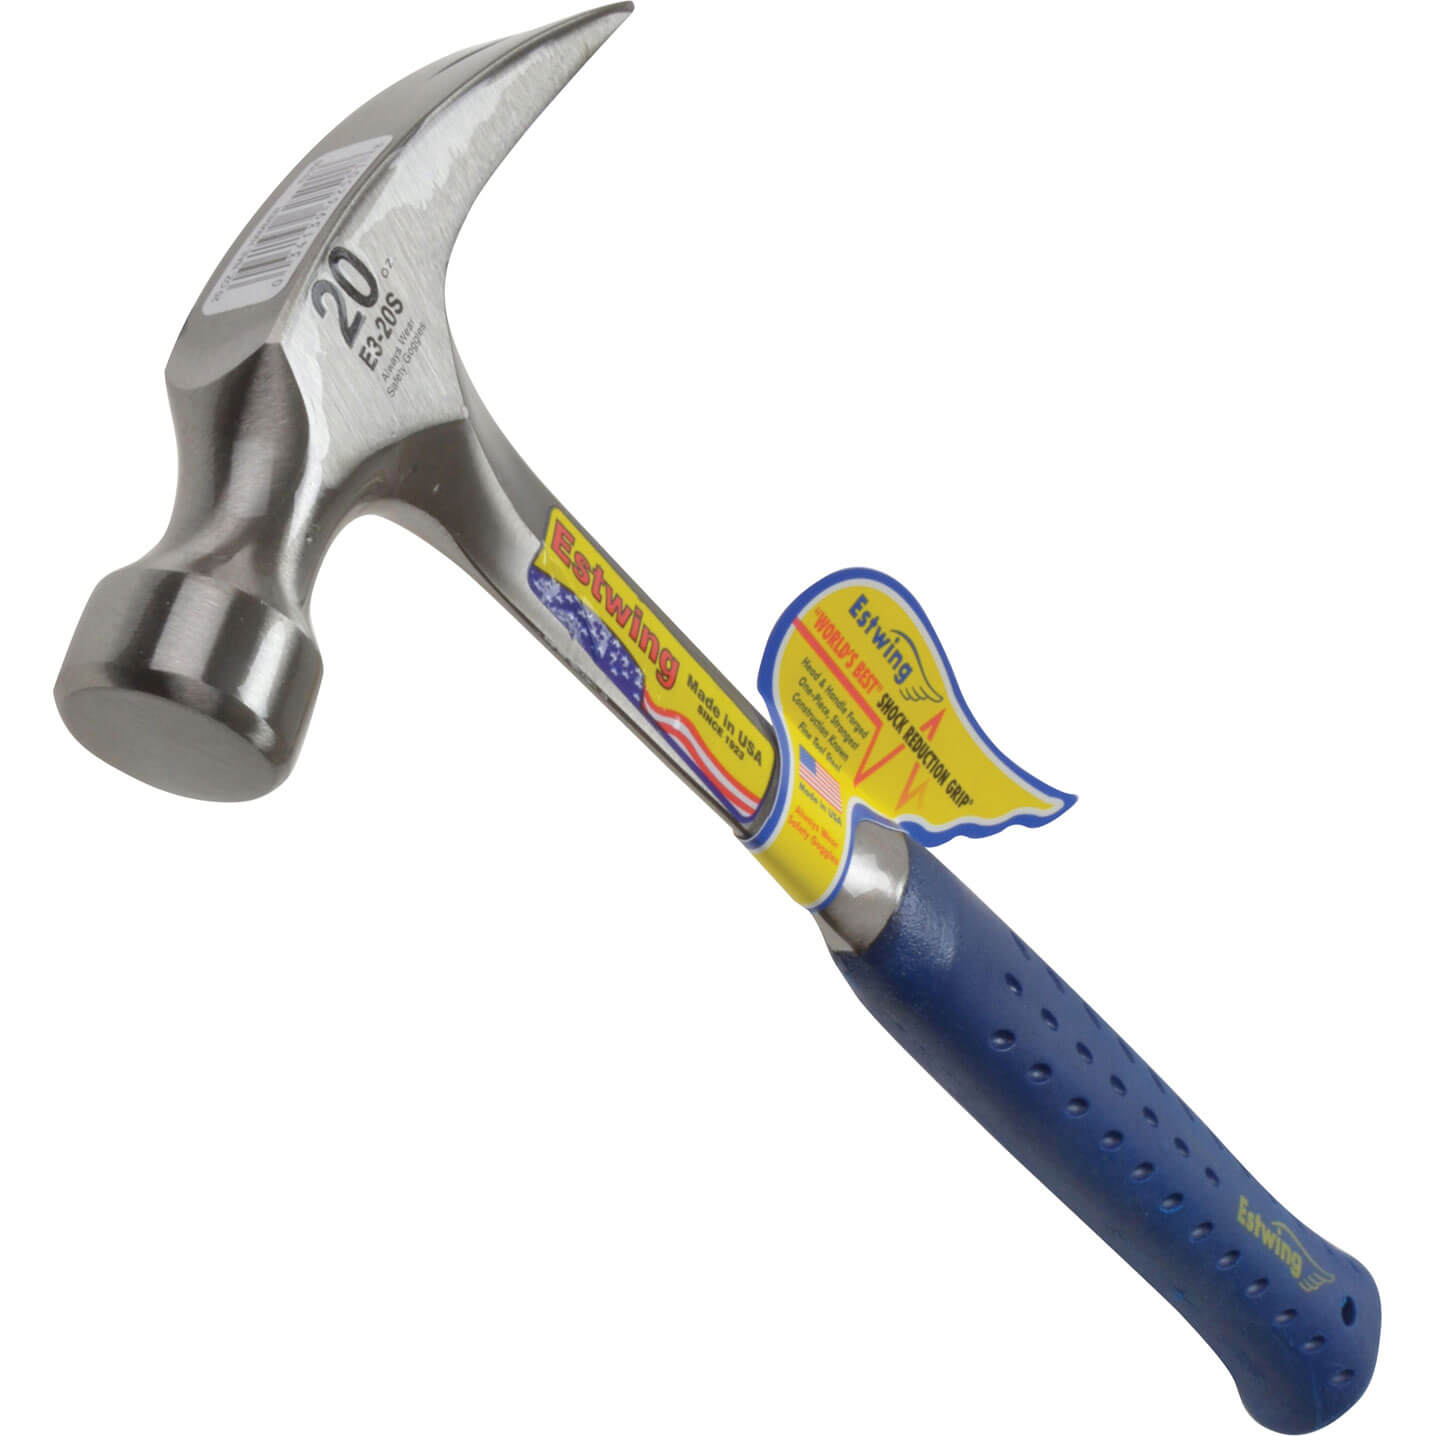 Estwing Straight Claw Hammer 560g